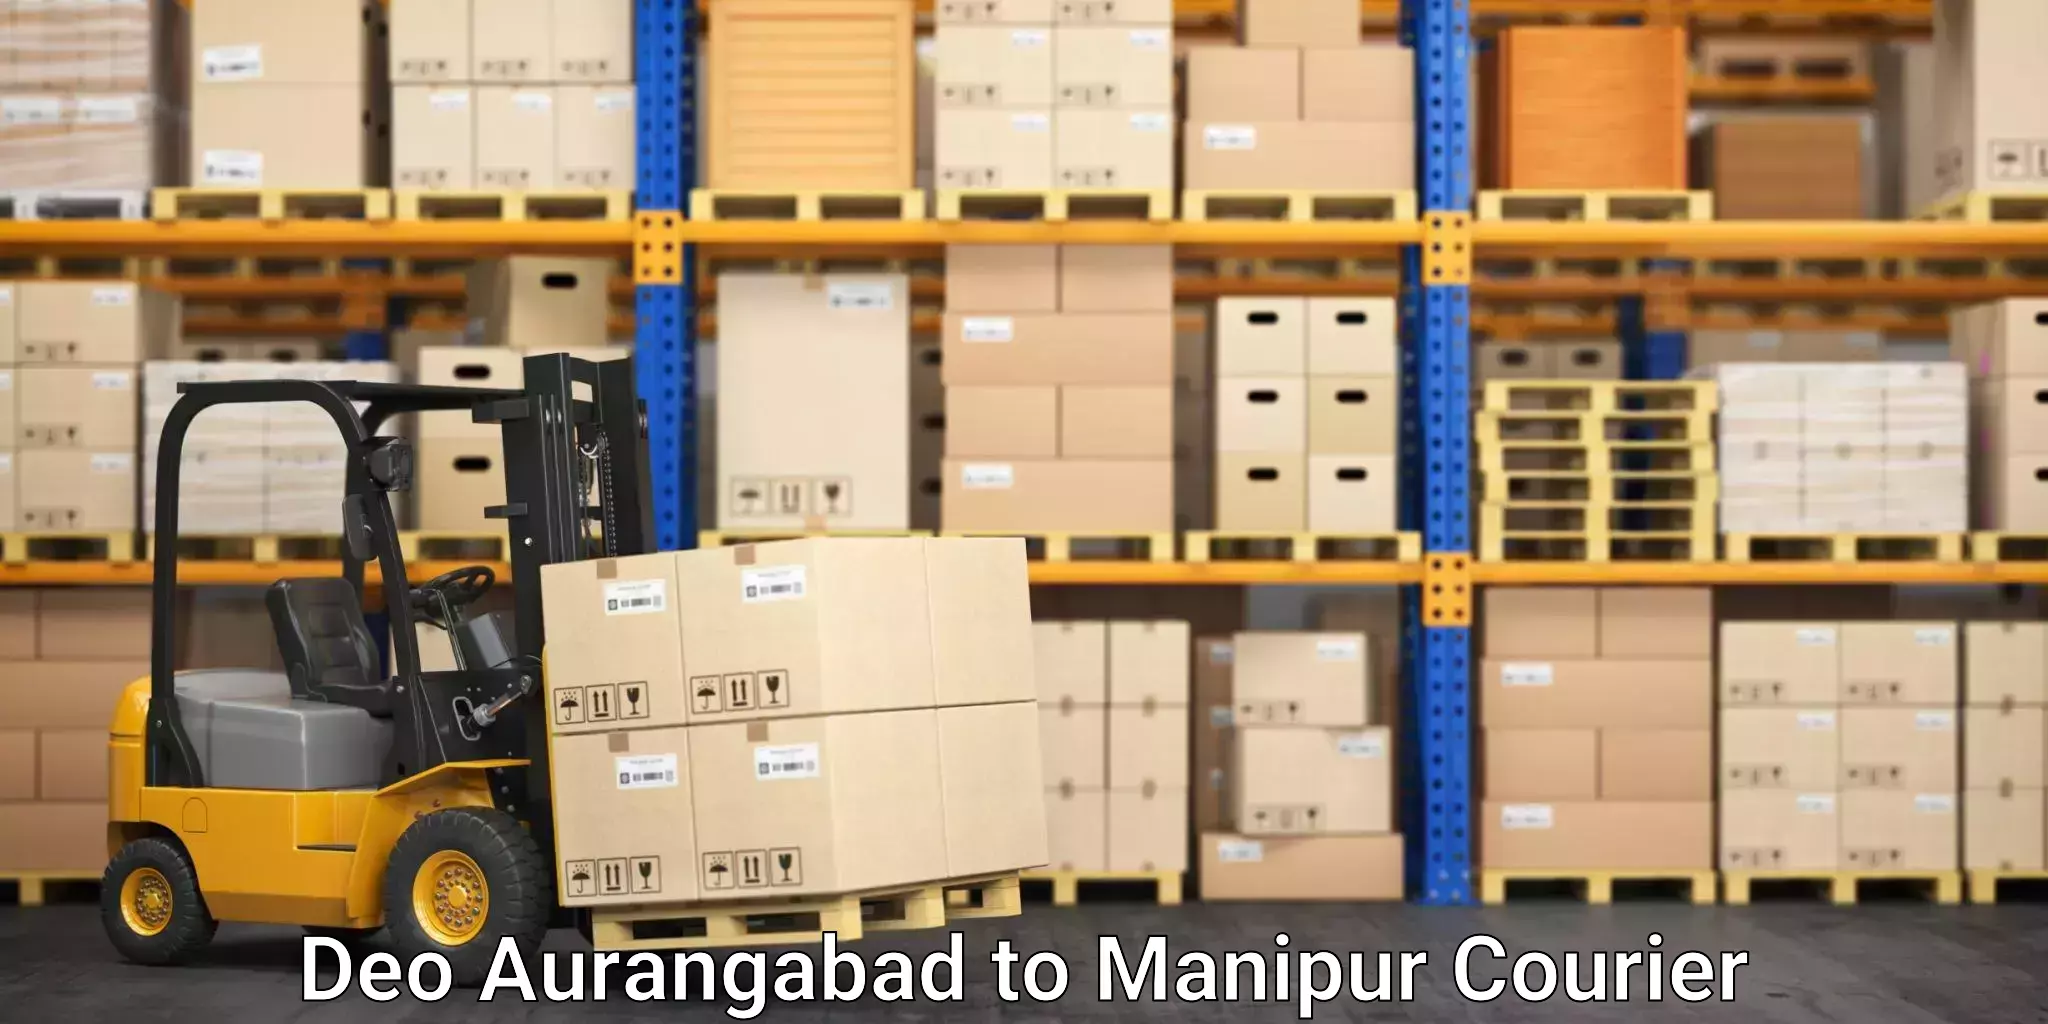 Furniture moving plans Deo Aurangabad to Imphal